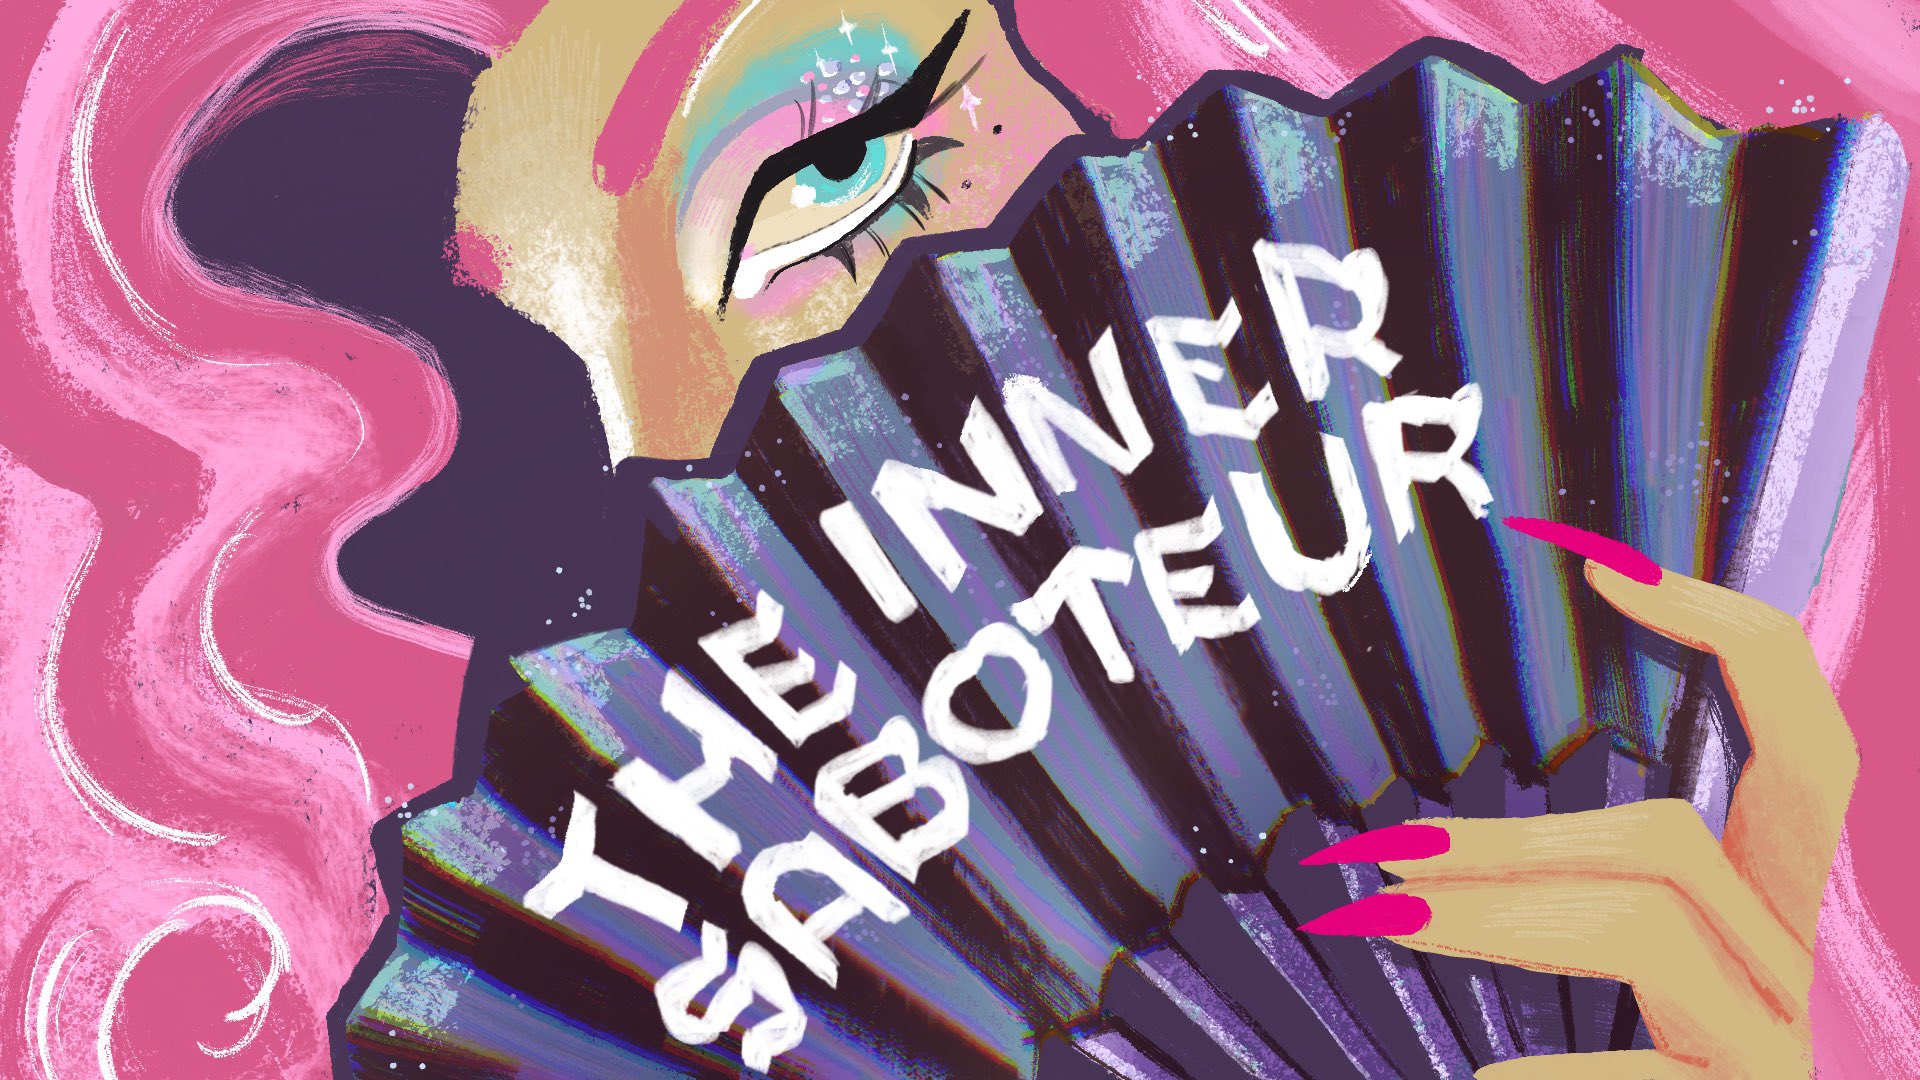 A cartoon Drag Queen hides behind a fan that says "The Inner Saboteur"